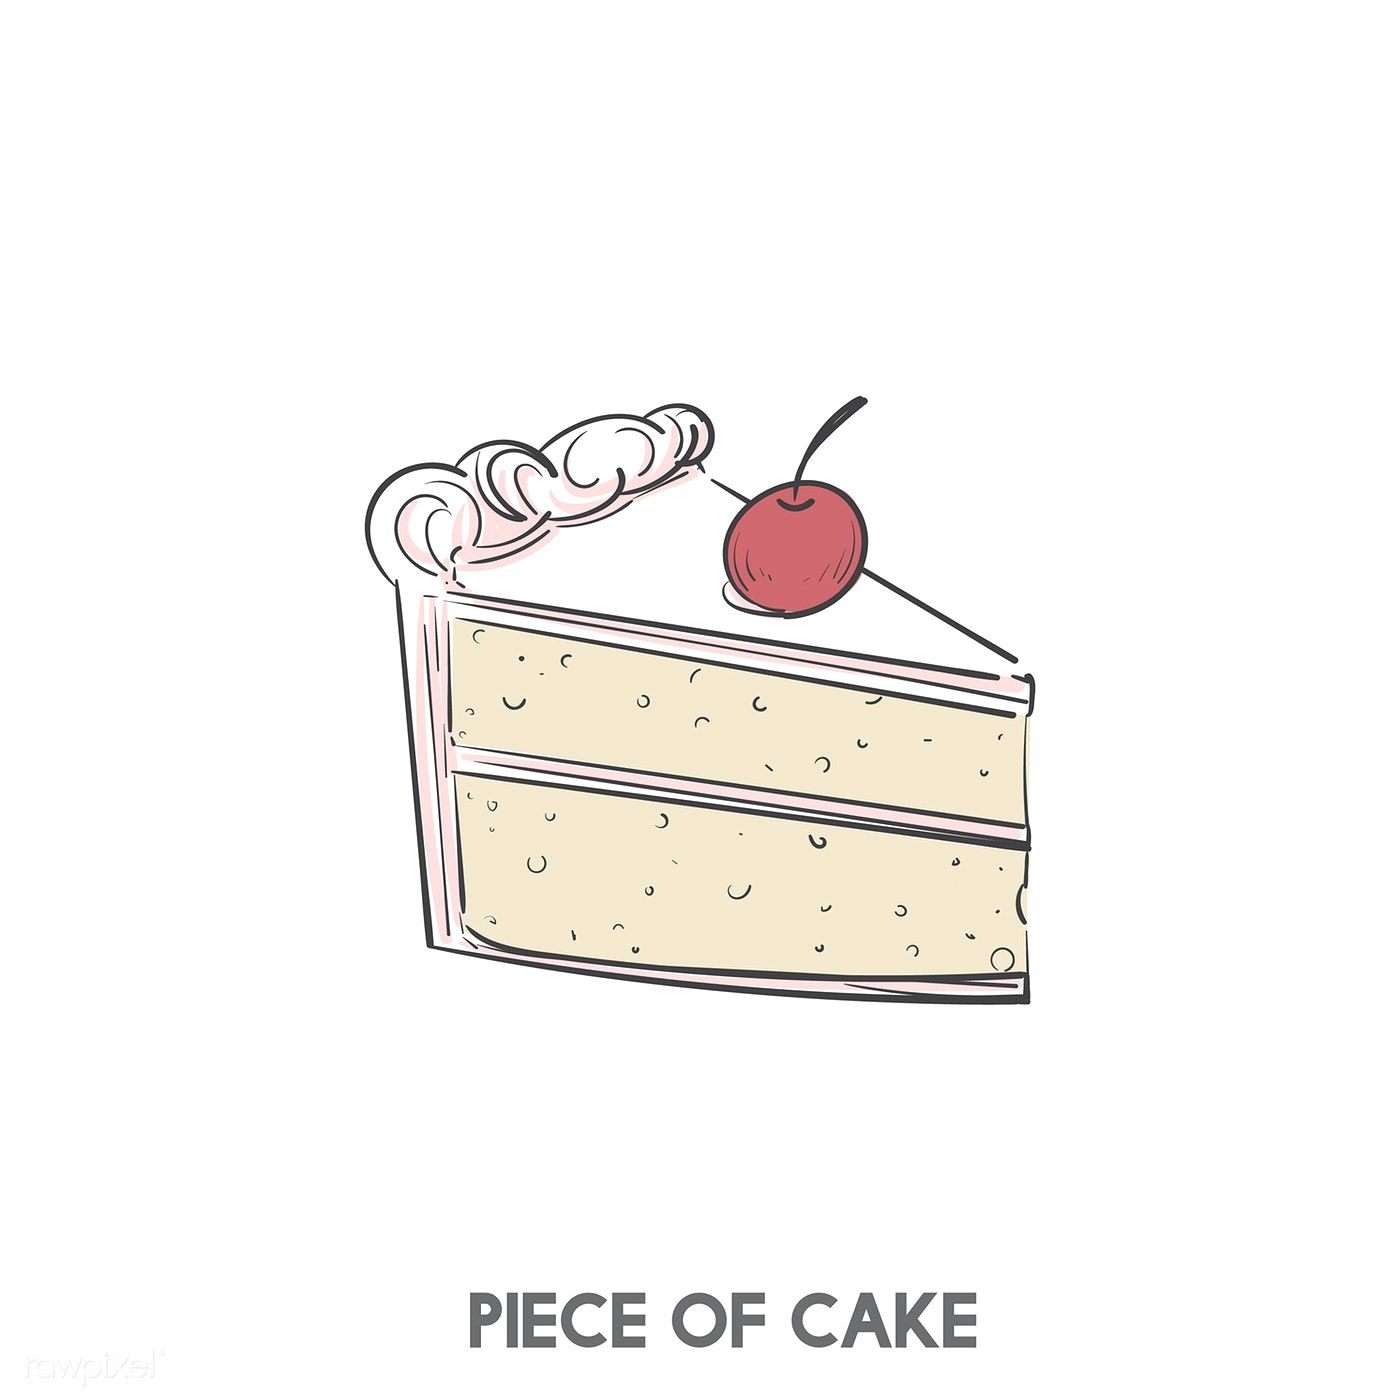 A piece of cake. premium image. Cake drawing, Cake illustration, Piece of cakes